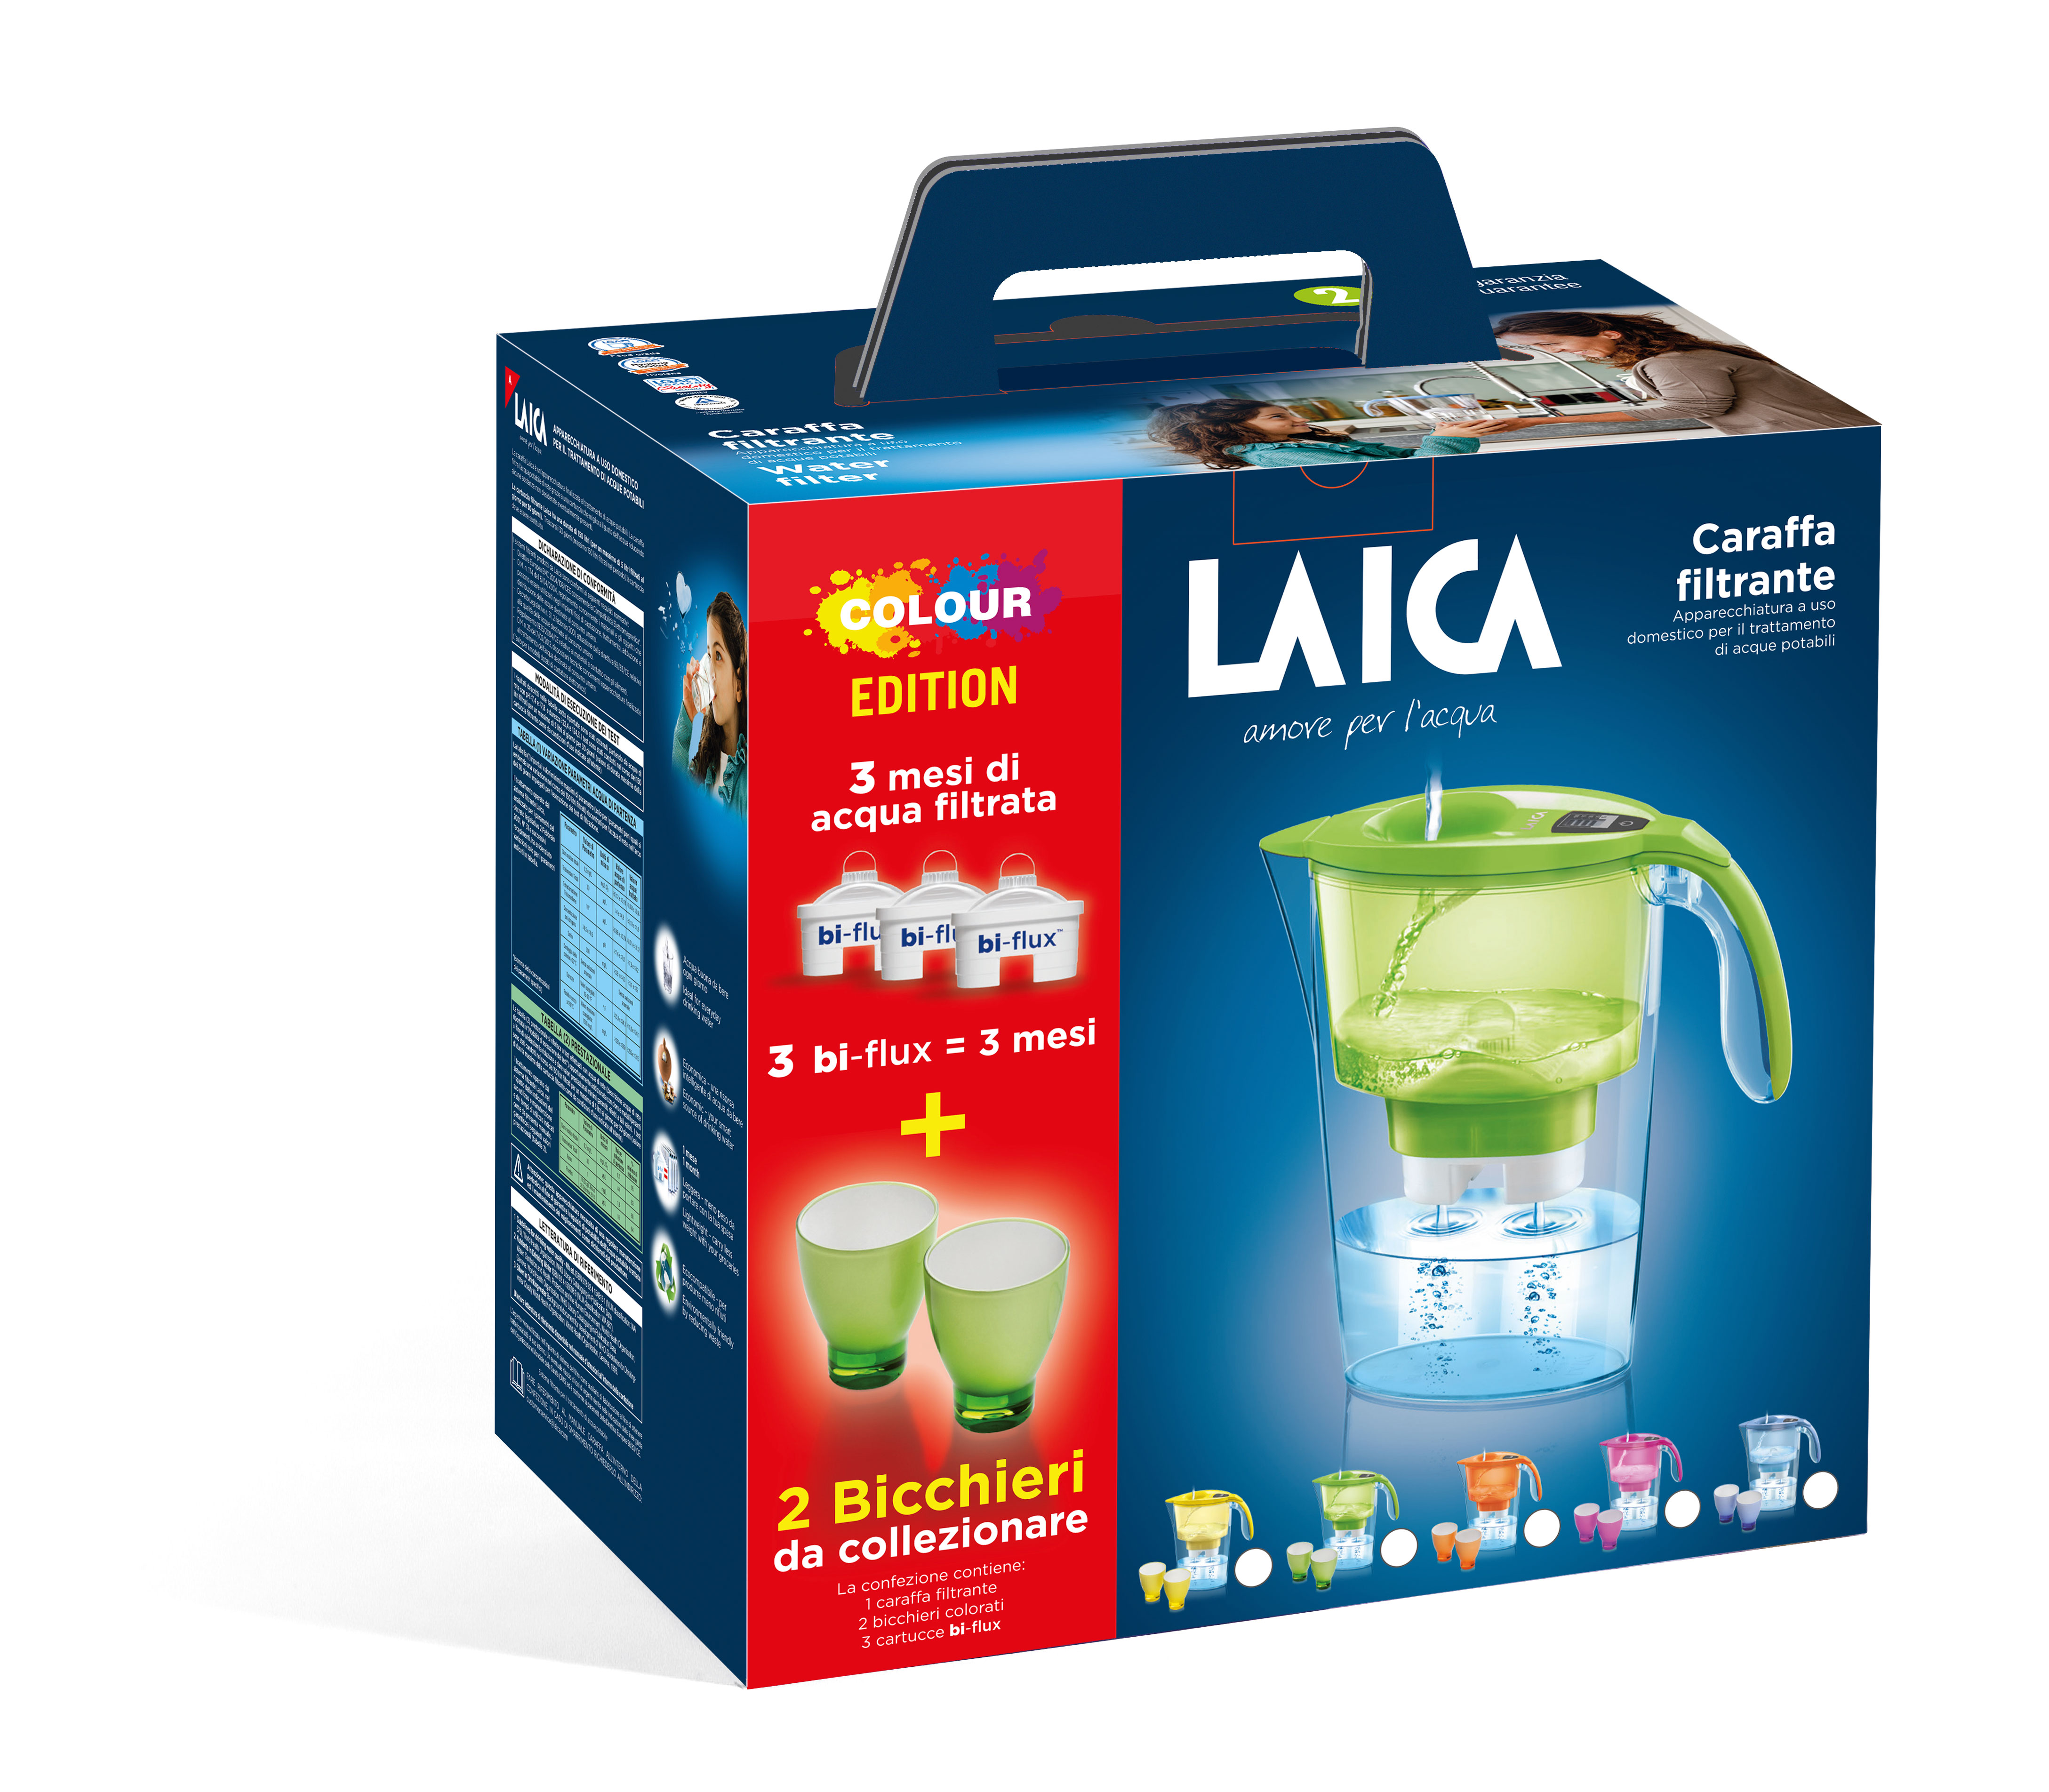 Laica Stream + 6 Filters 2.3L Filter Jug Clear